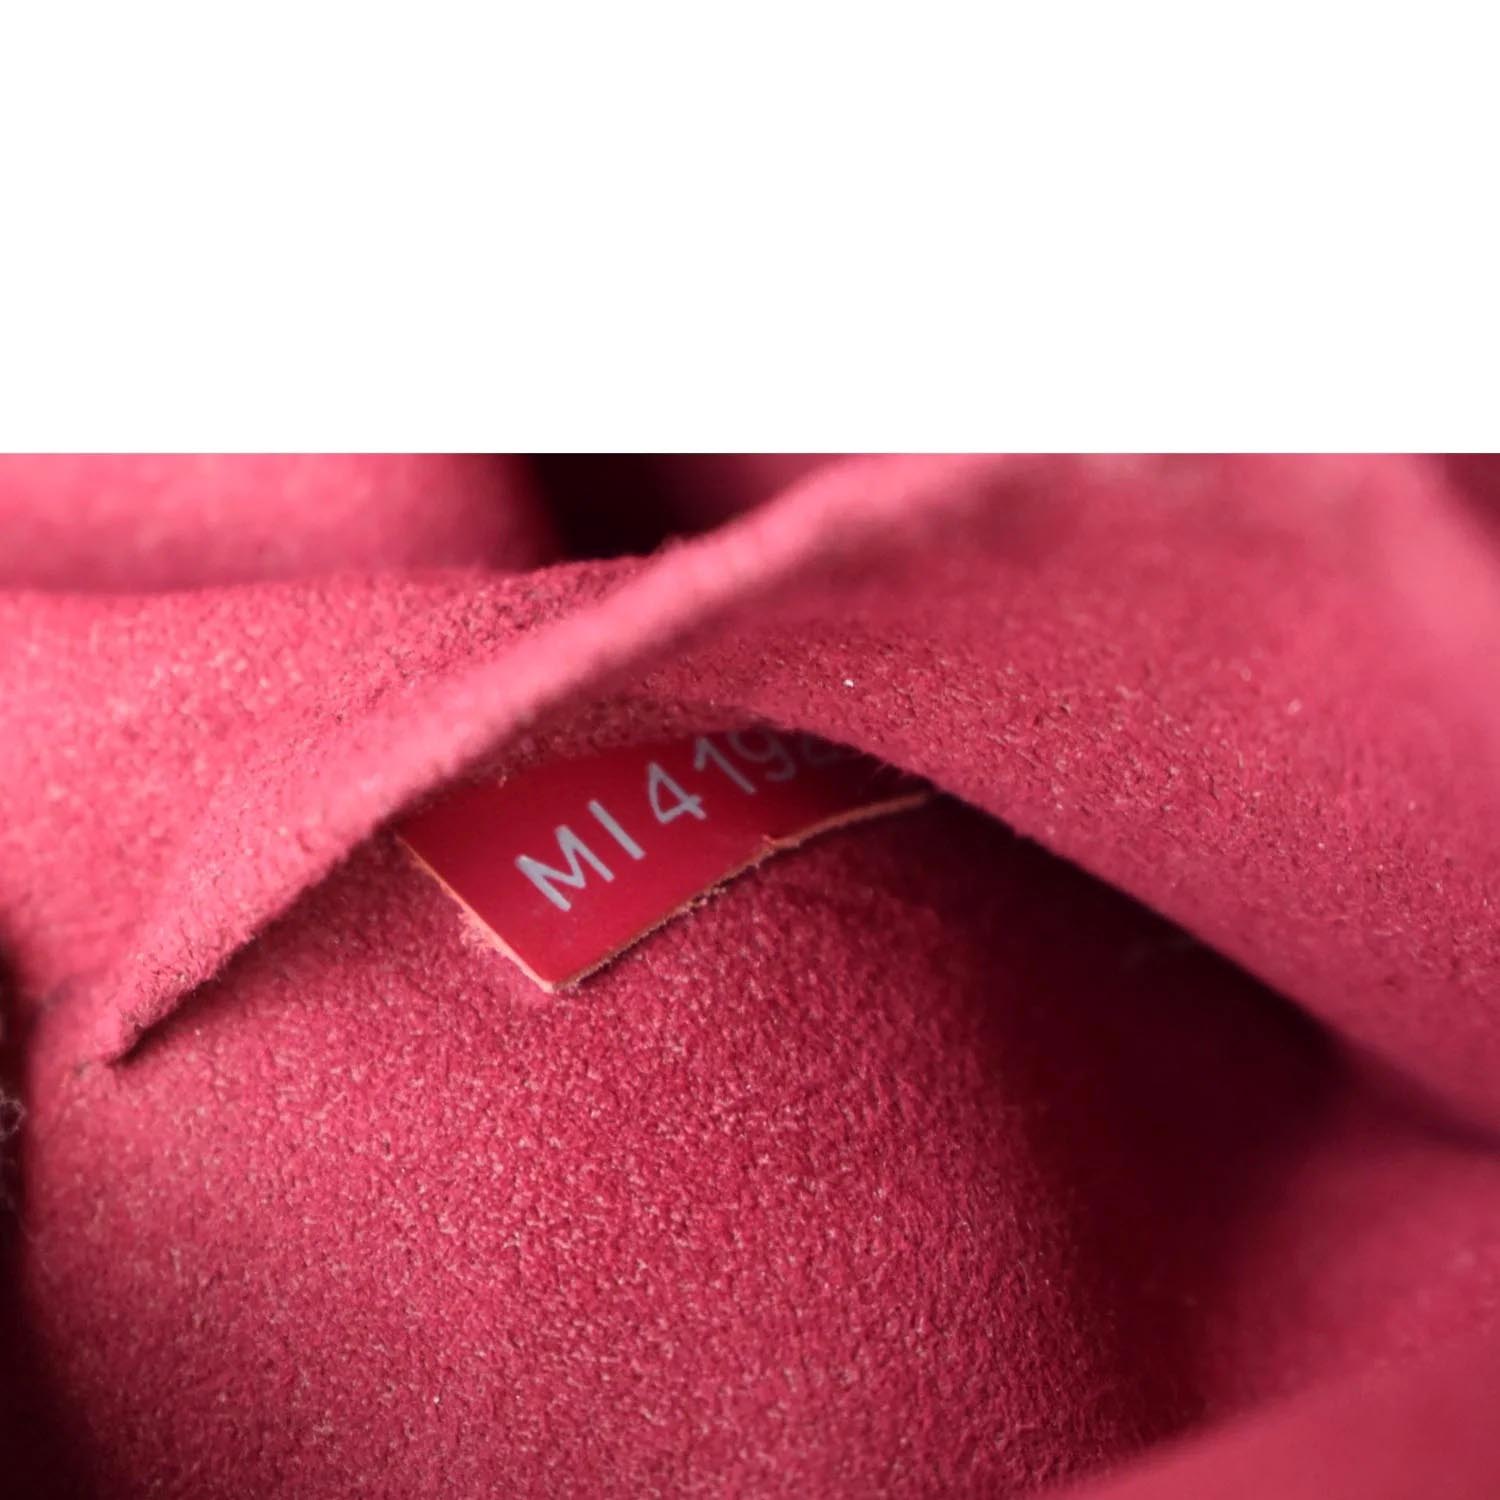 Louis Vuitton Red and Black Python Alma BB Crossbody Bag at